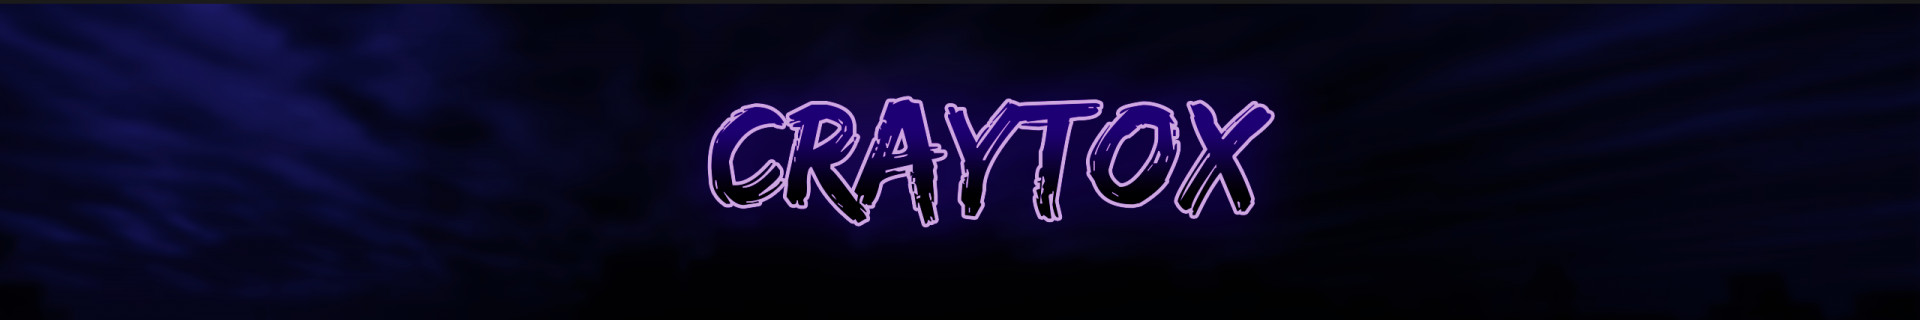 CraytoX